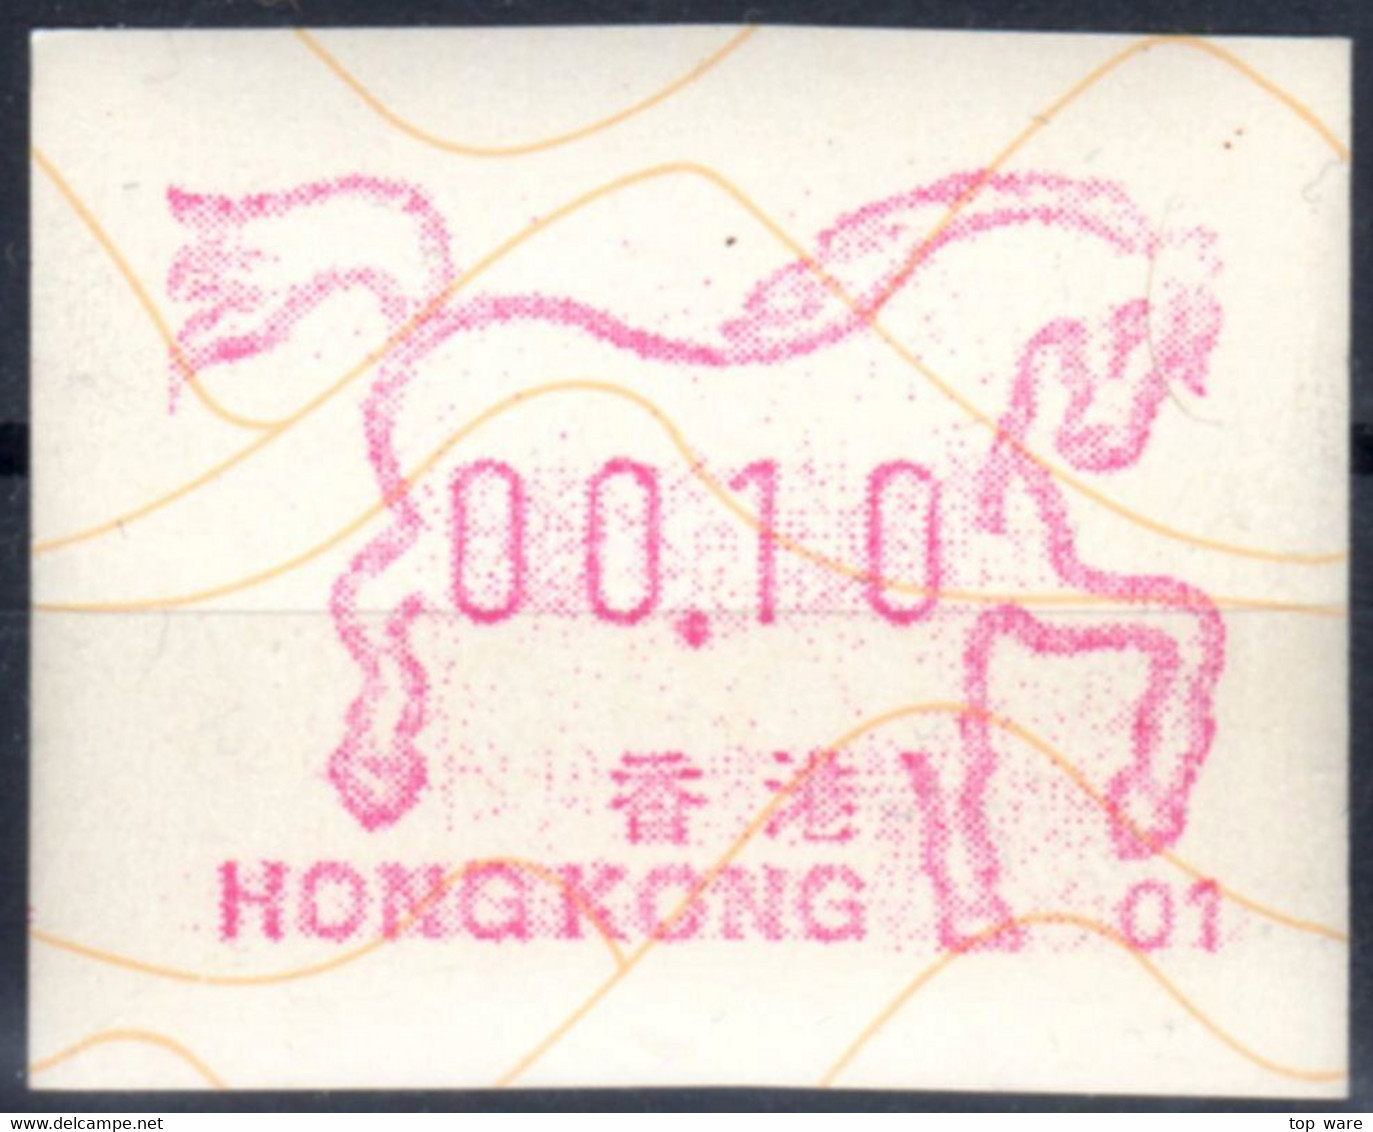 Hong Kong China ATM Stamps / 1990 / Zodiac Horse 01 MNH Frama Nagler Klussendorf CVP Automatenmarken - Distribuidores